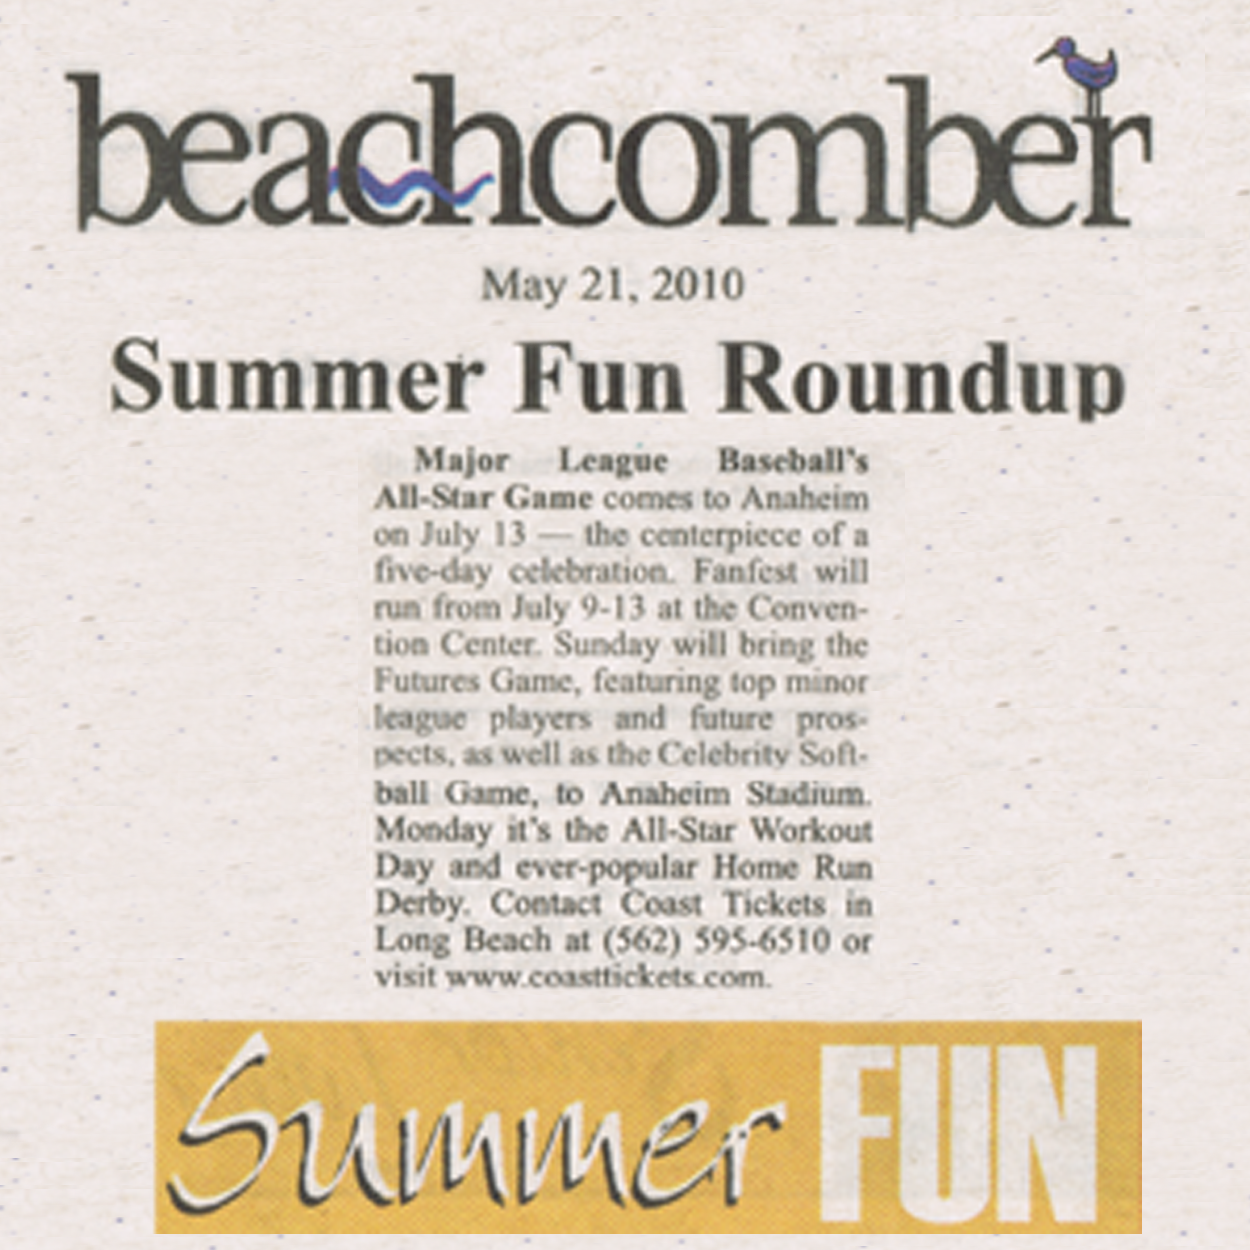 Coast Tickets in the Beachcomber 2010